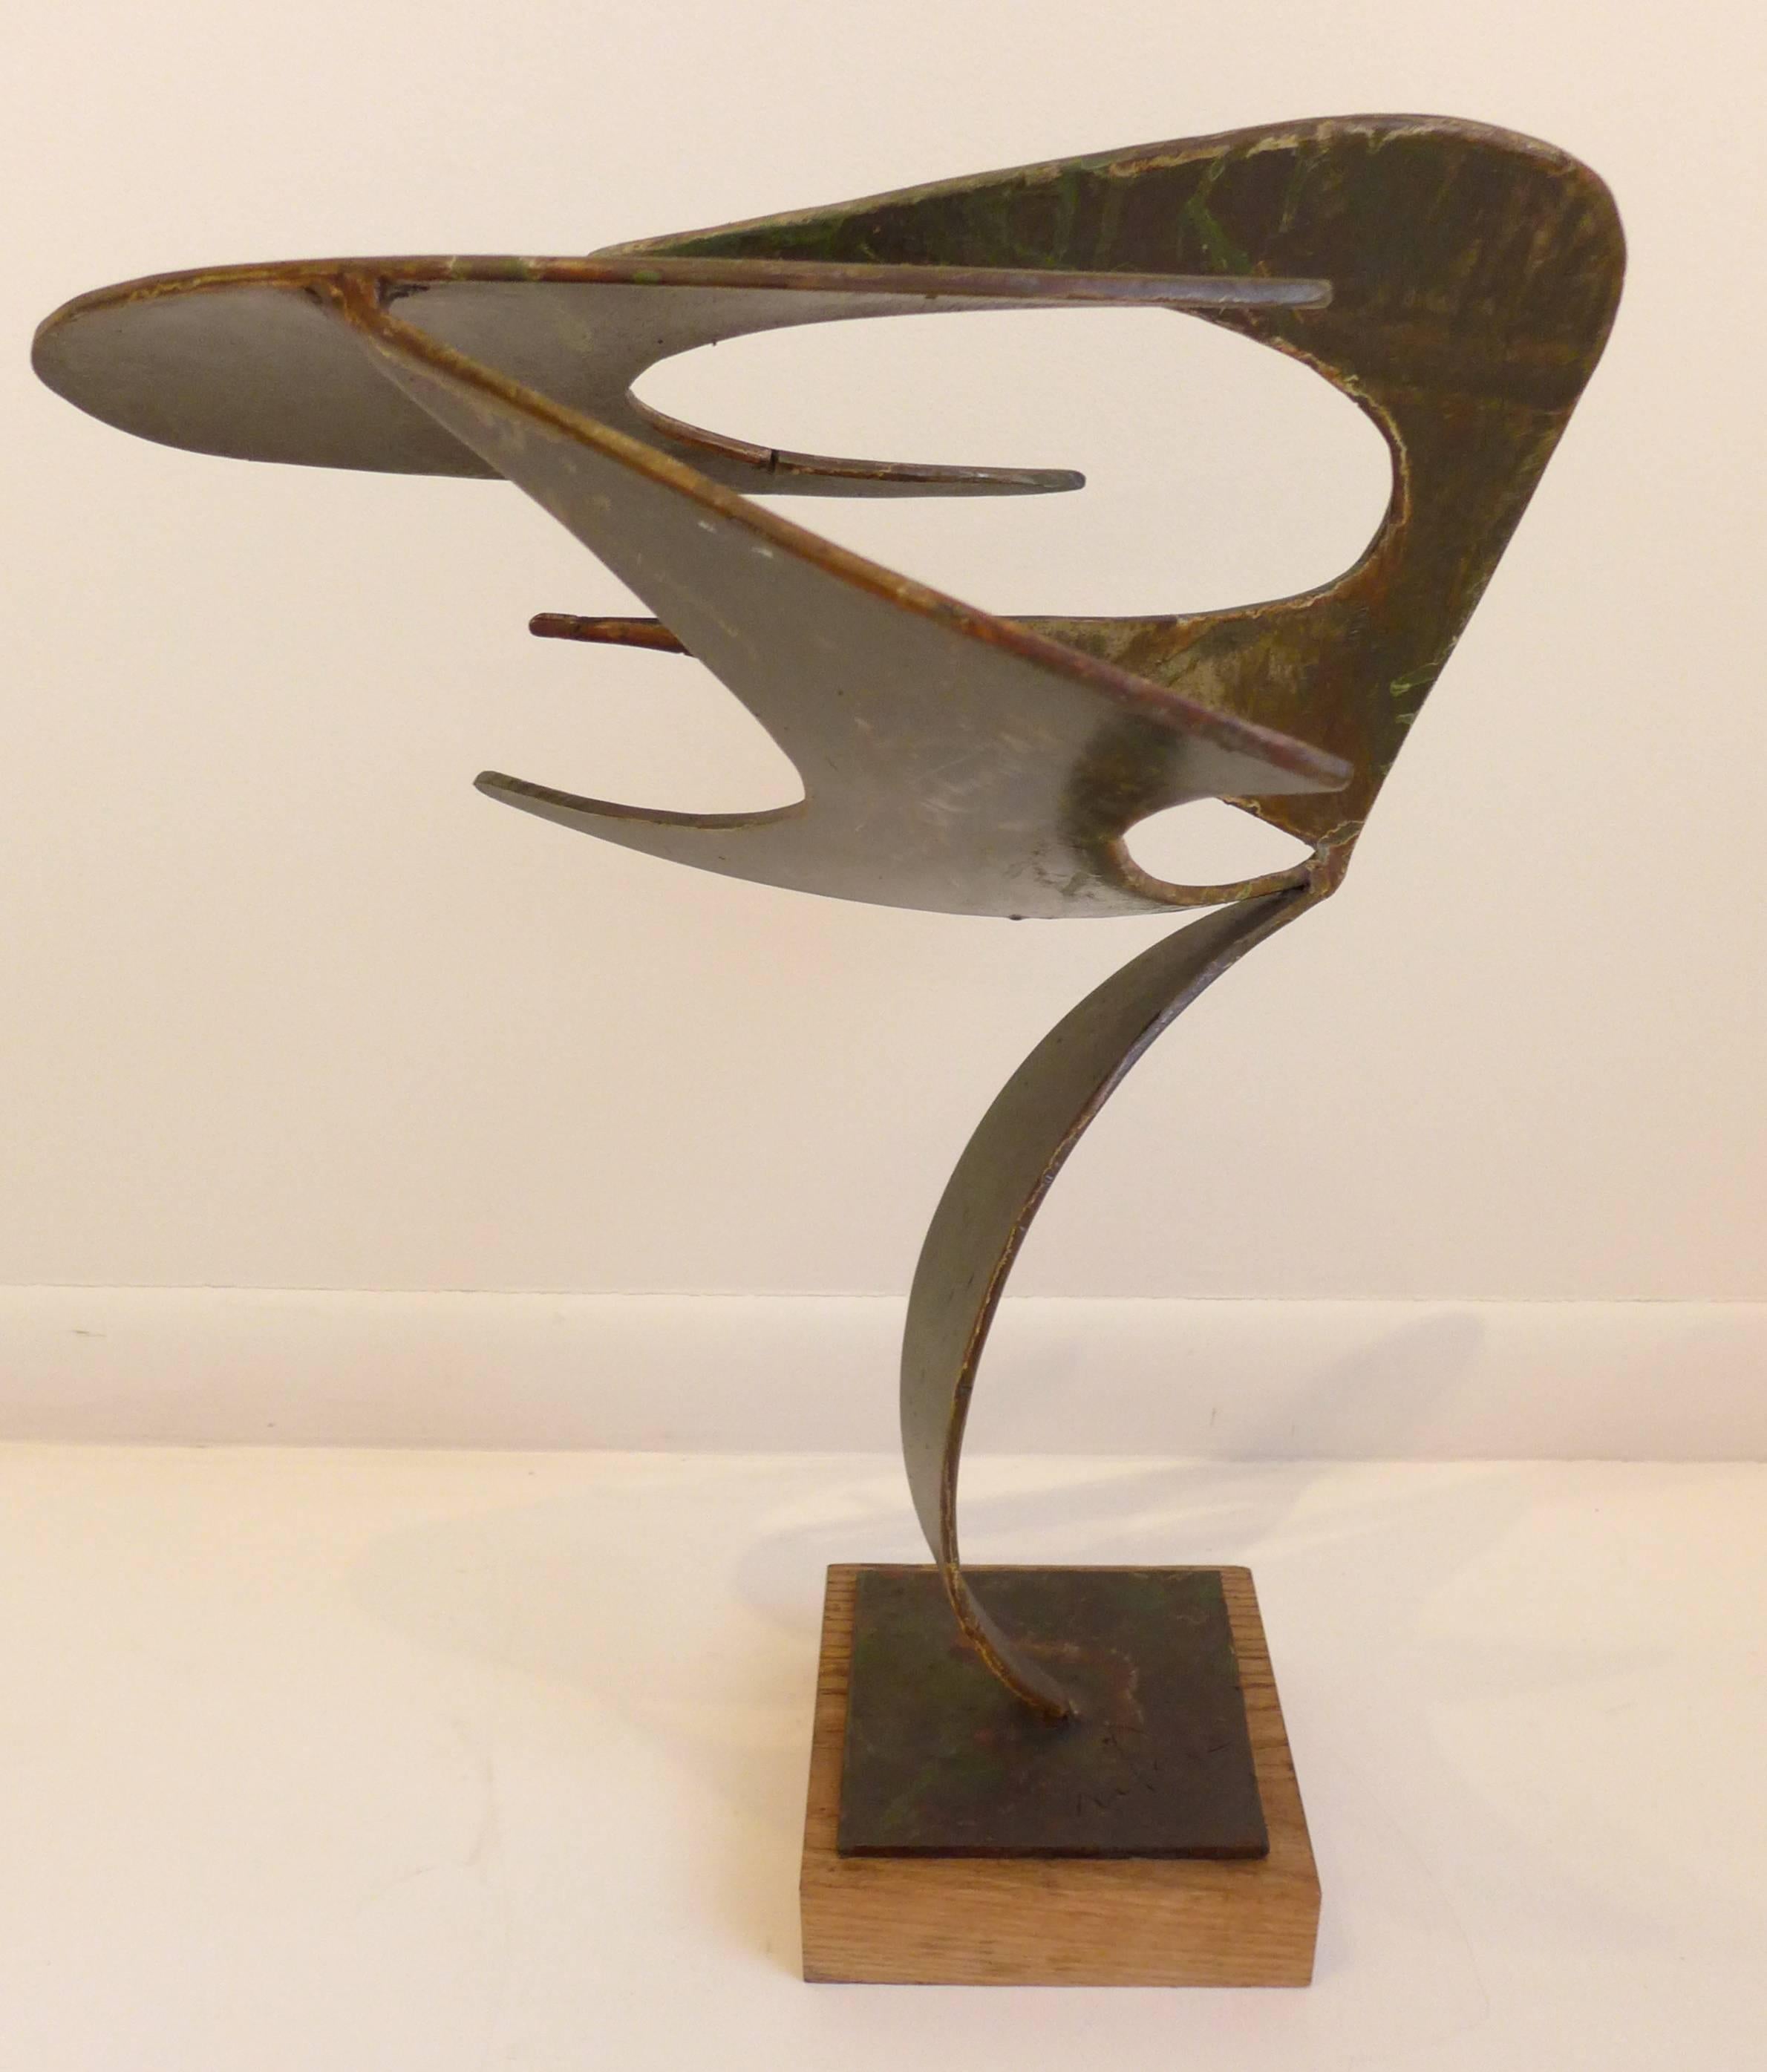 Voids series sculpture, titled 